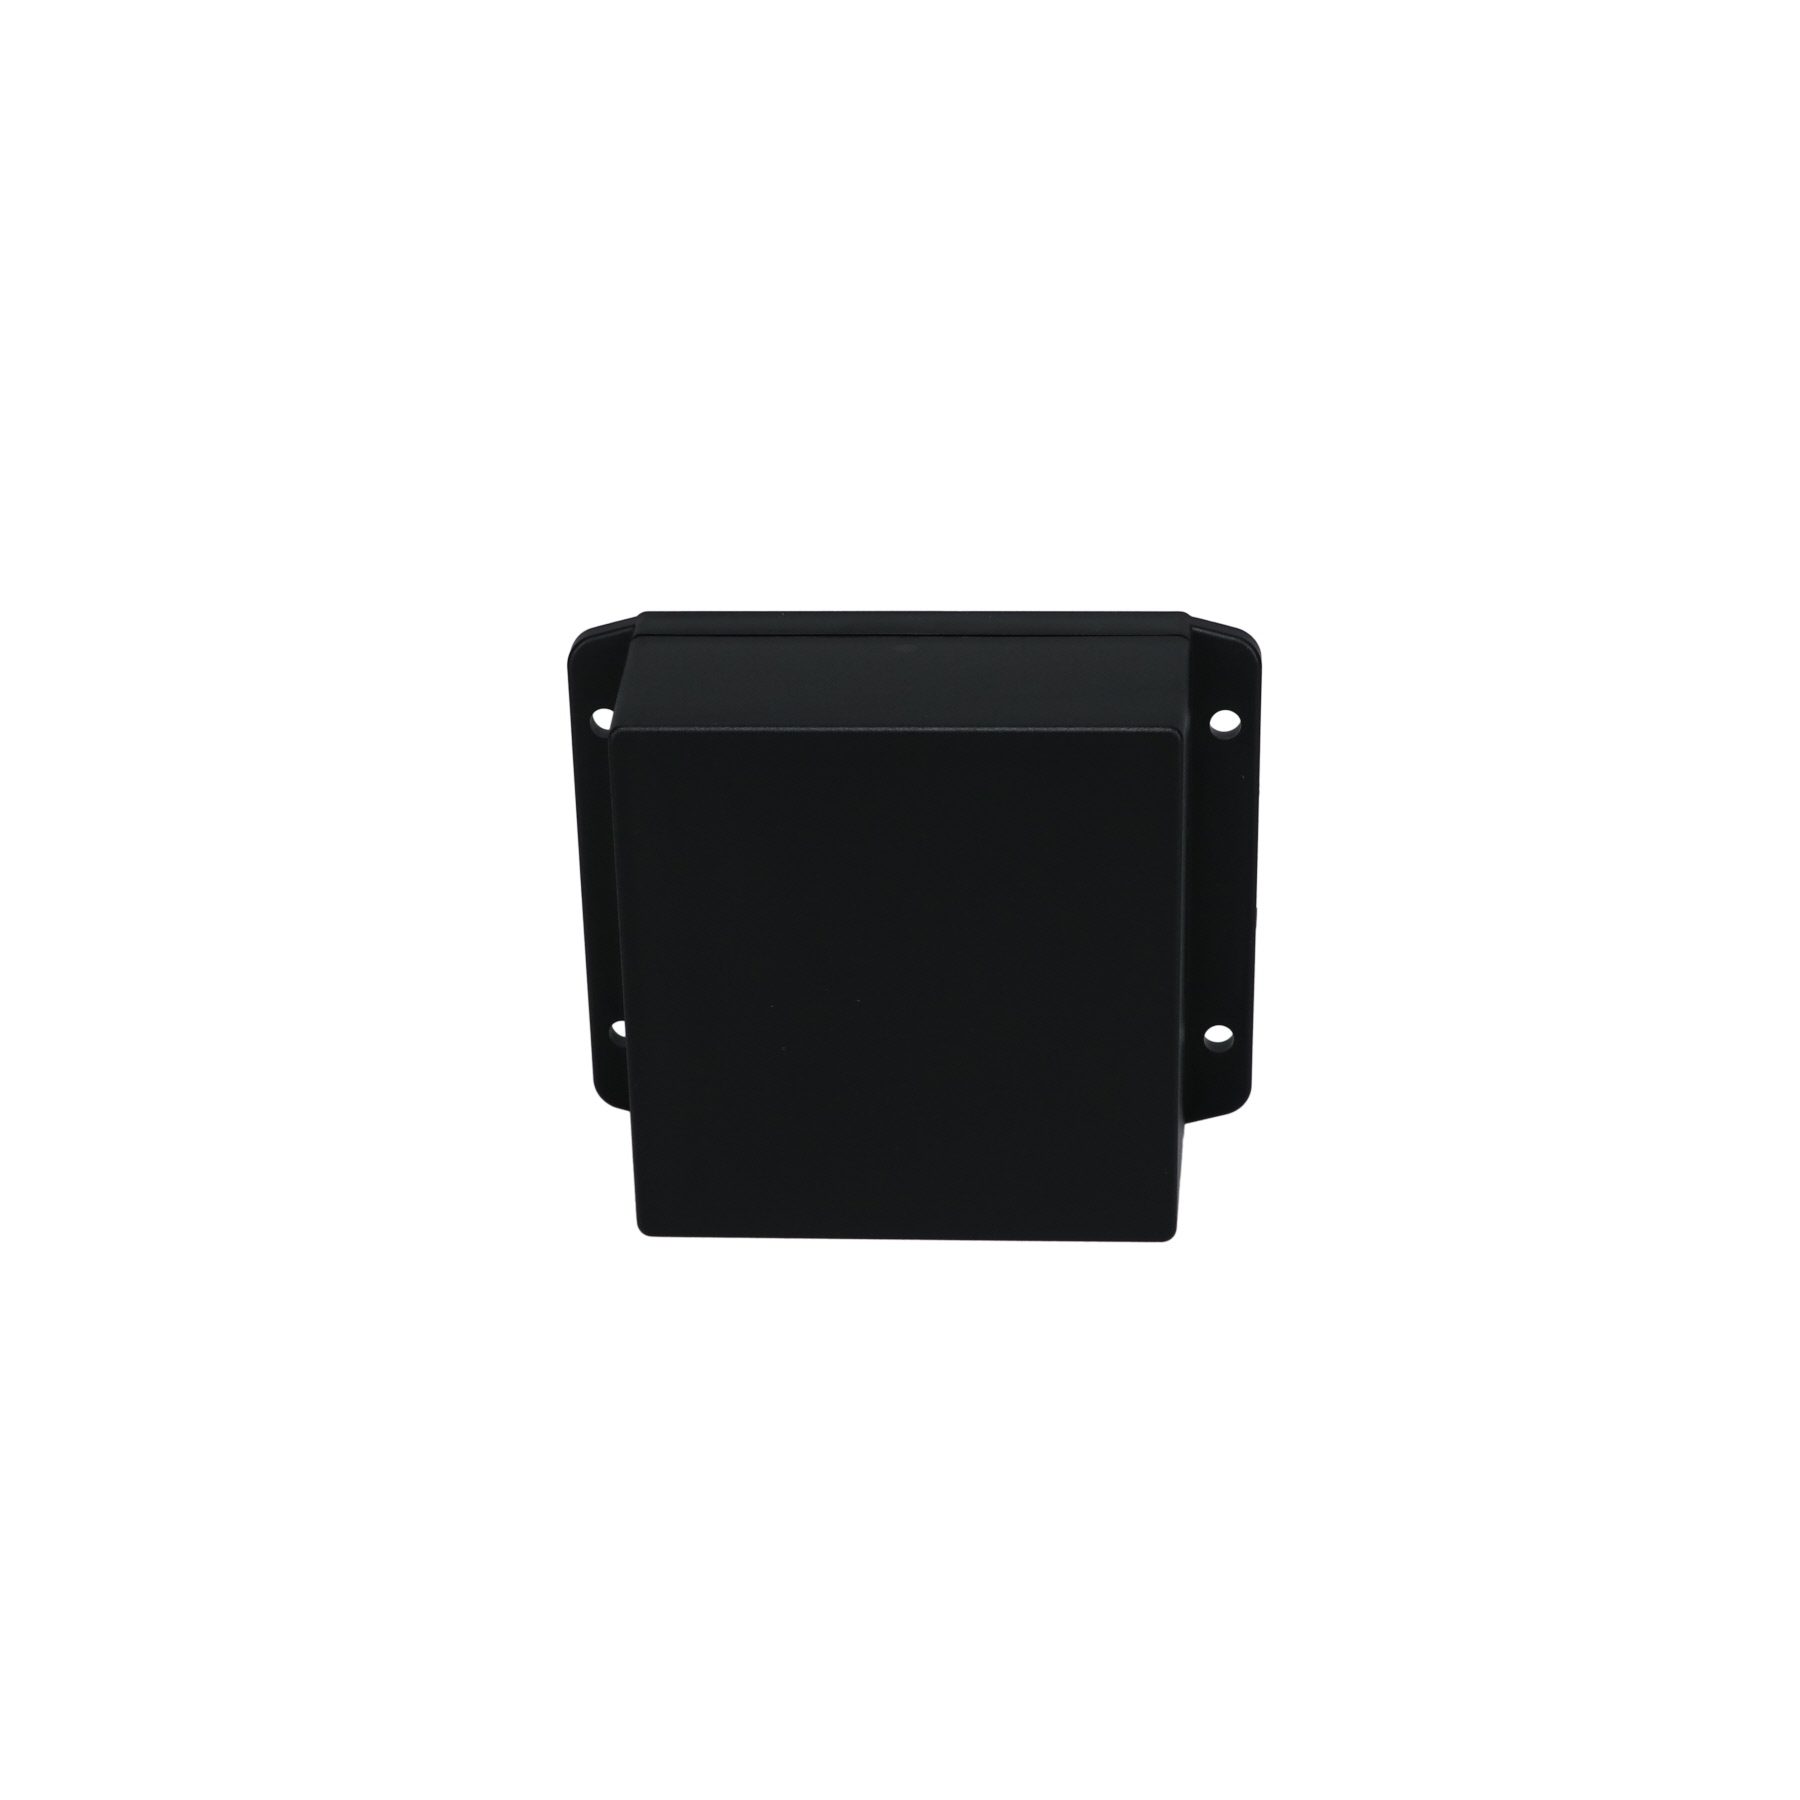 Snap Utility Box Black CU-18431-B